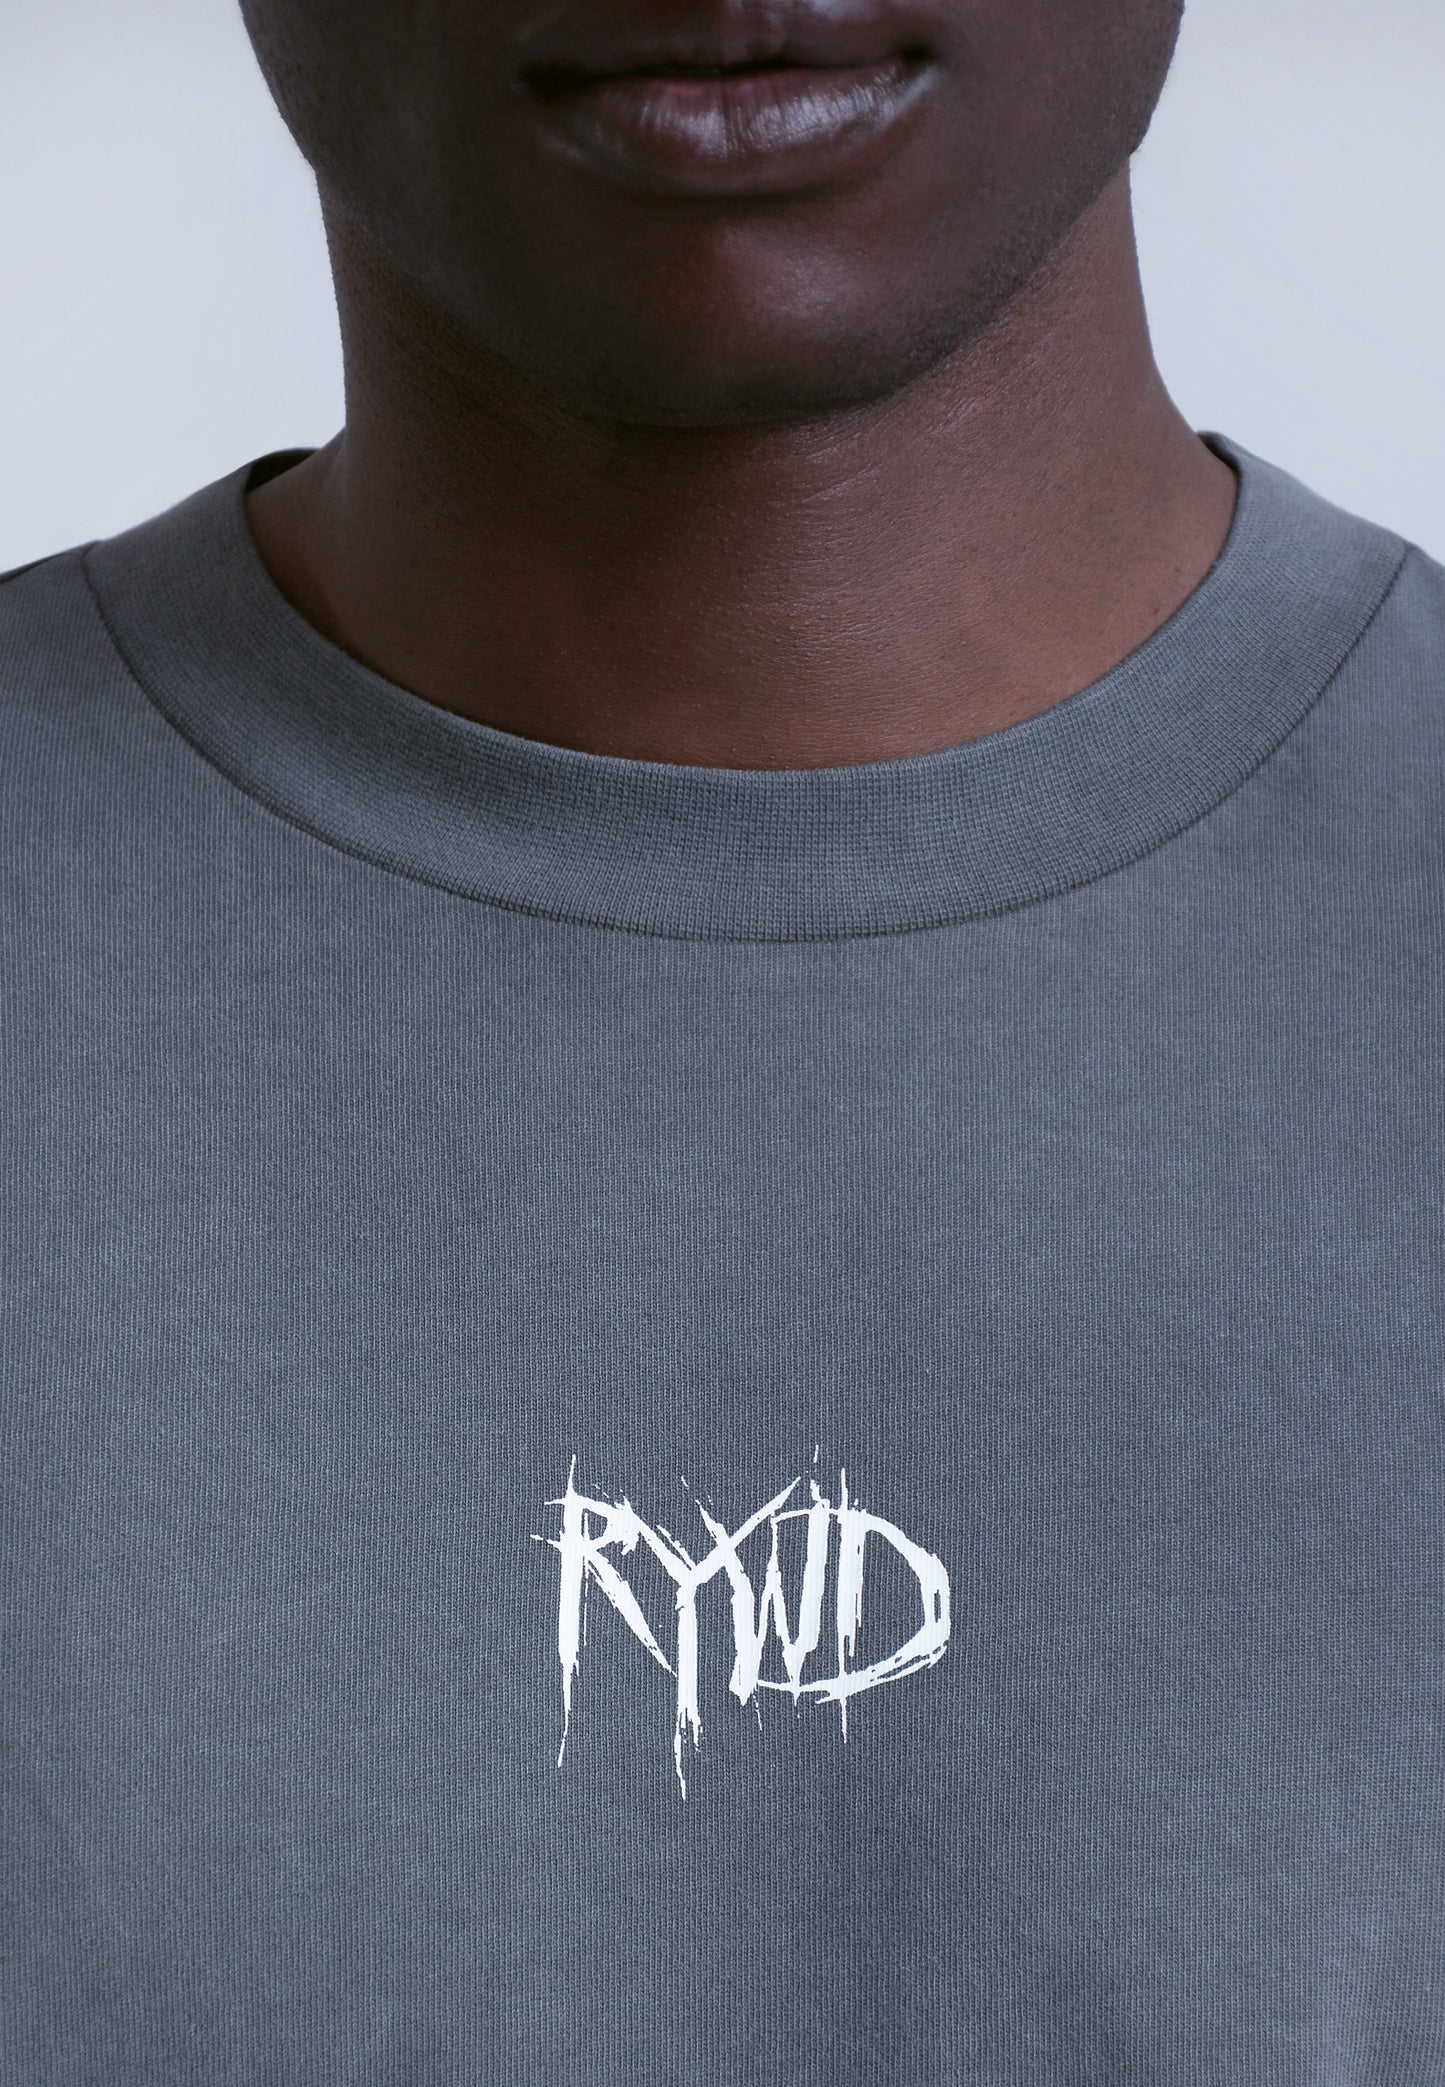 RYWD Wasted T-Shirt grau 3 unisex oversize streetwear